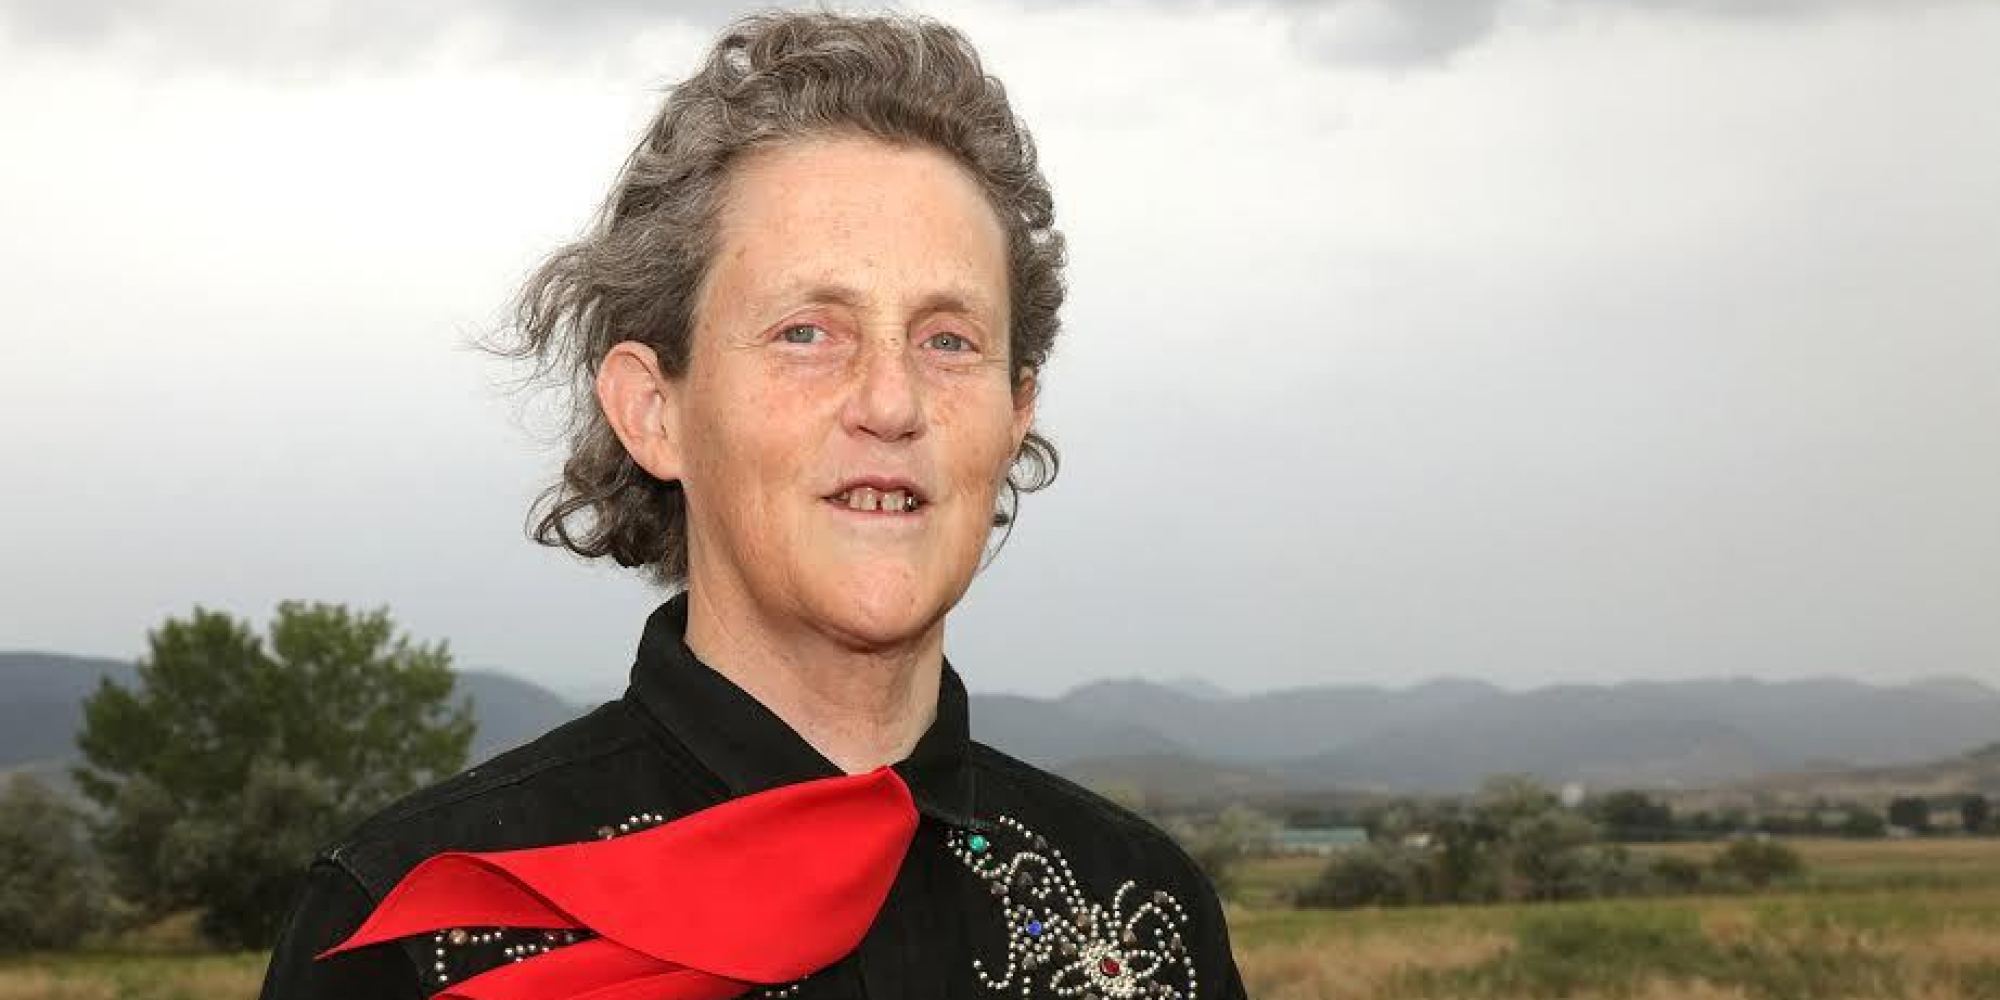 2010 Temple Grandin